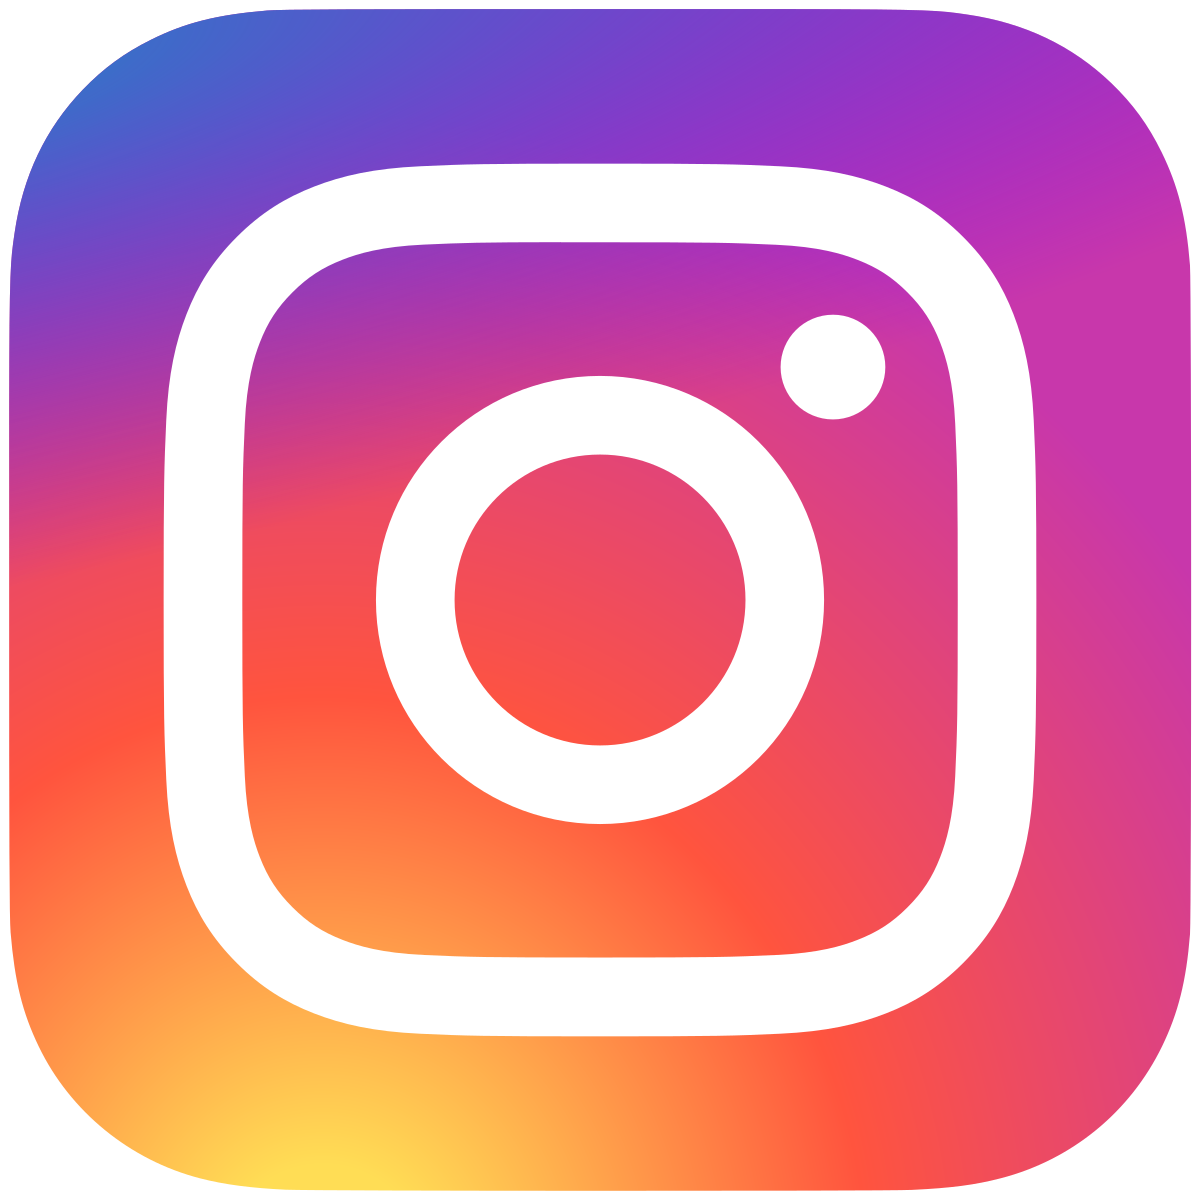 Télécharger photo logo instagram png